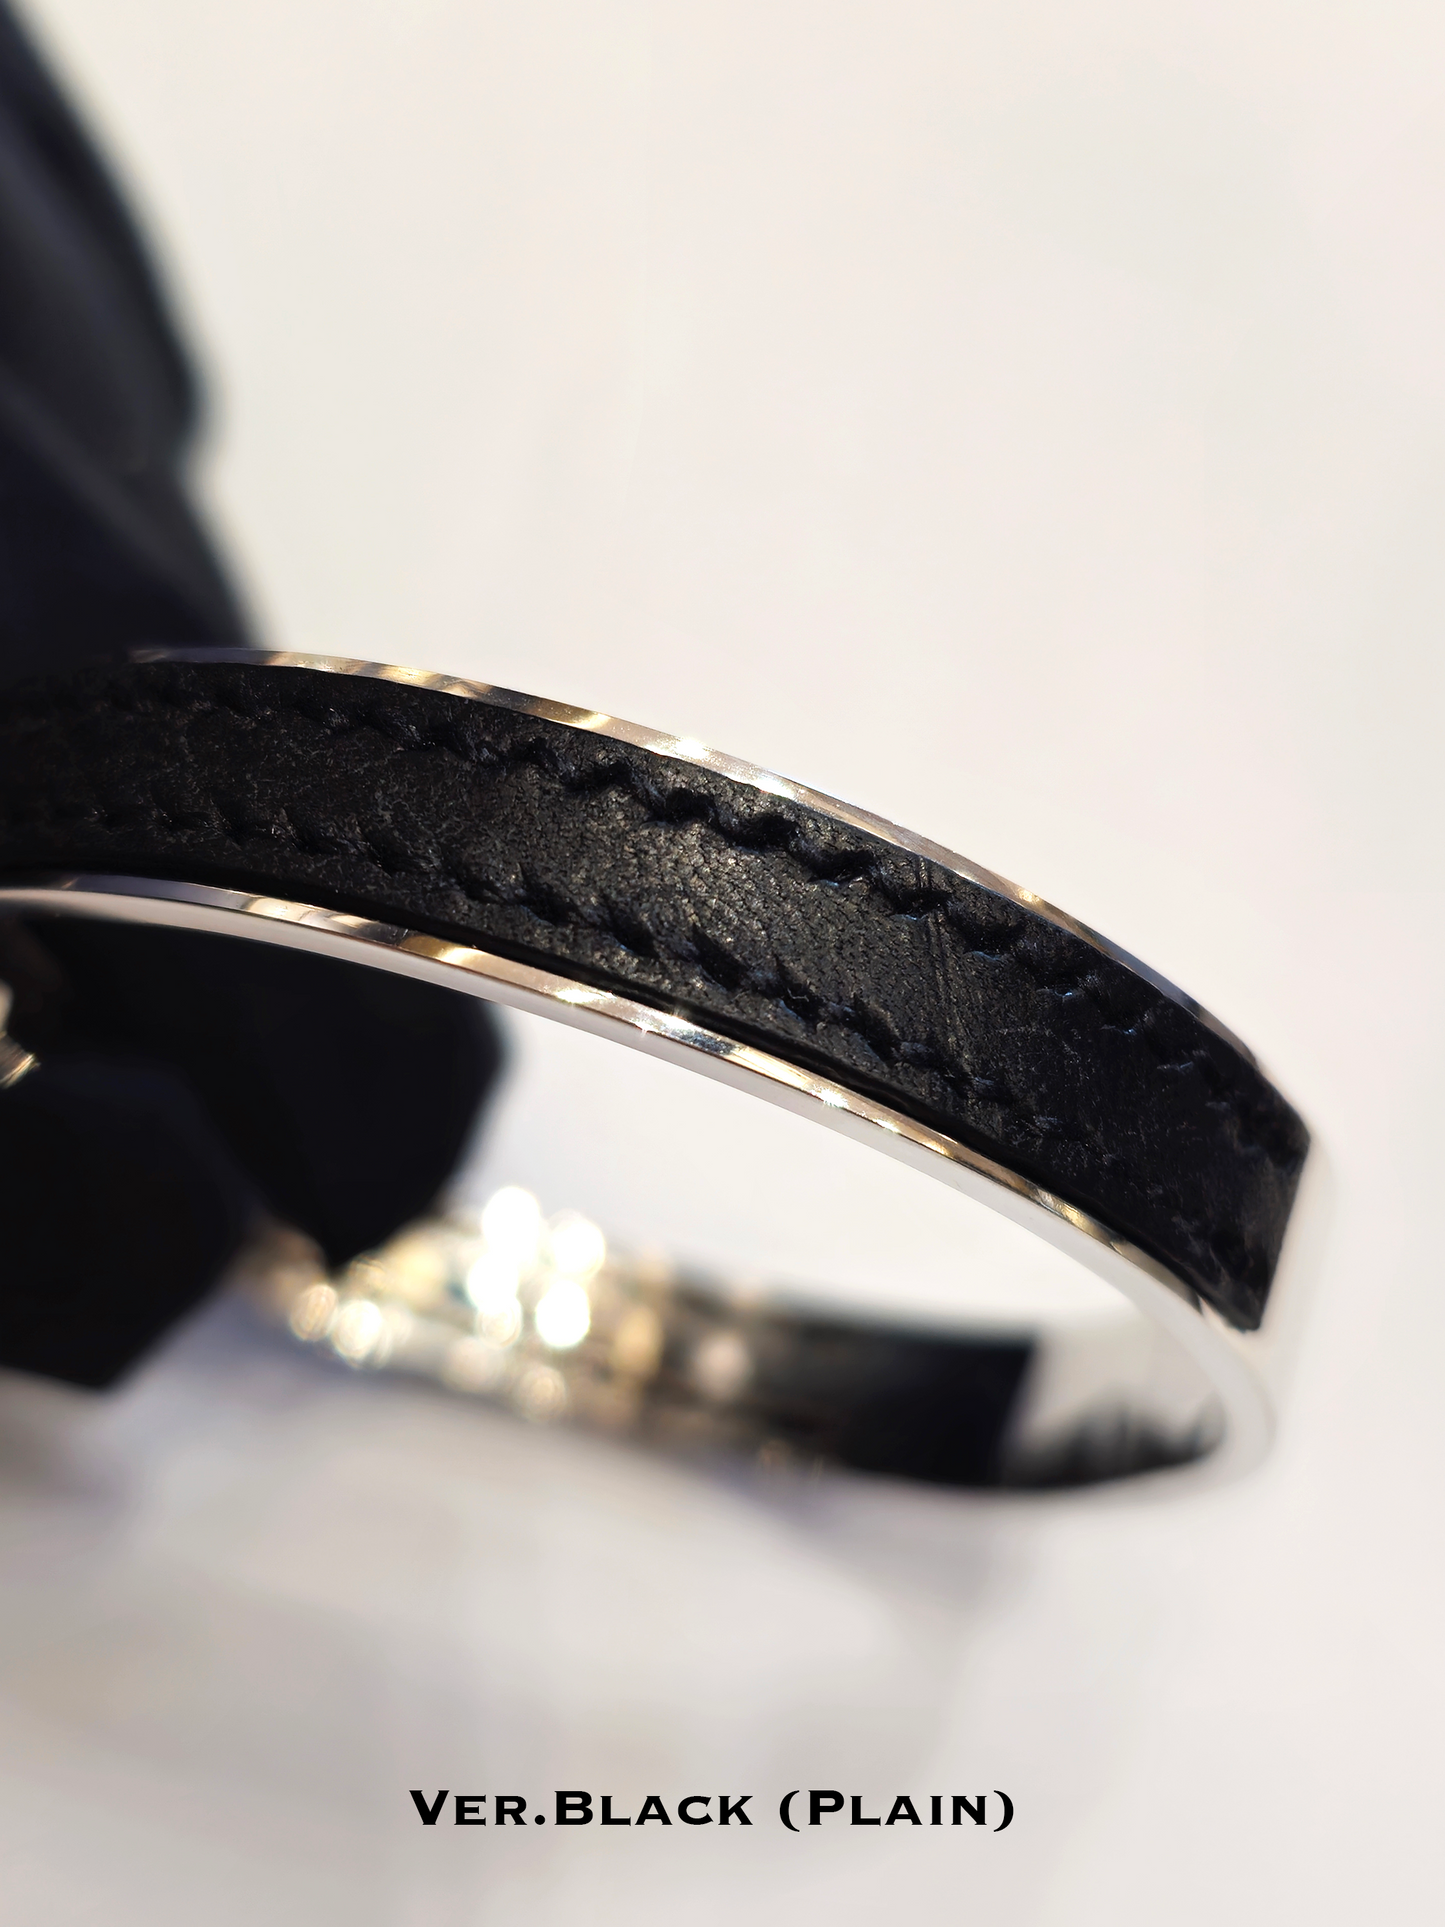 Twined Leather Bracelet, Small, Black (plain), Black Spinel